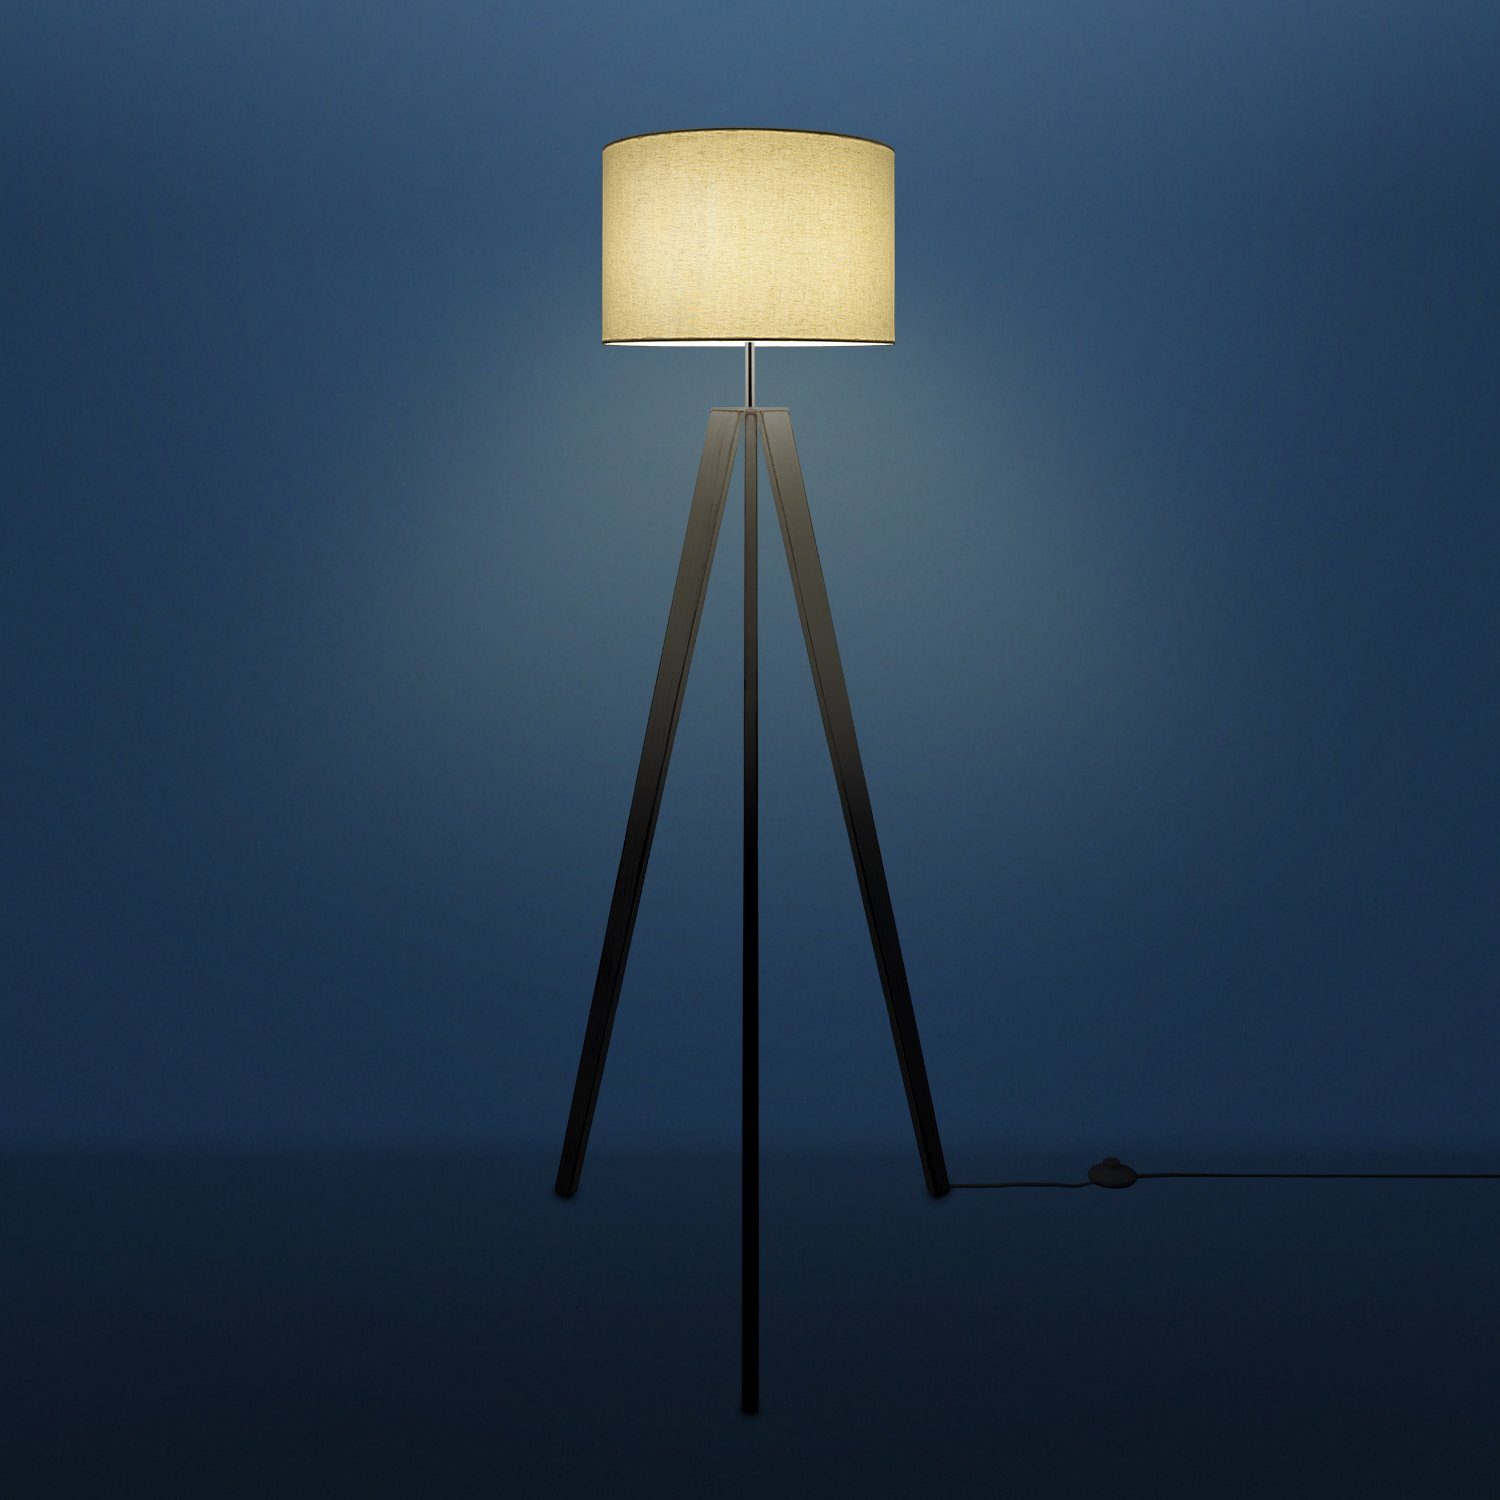 Paco Home Stehlampe Wohnzimmer E27 Stehlampe Leuchtmittel, Vintage LED Canvas Lampe Fuß ohne Skandinavischer uni Stil Color